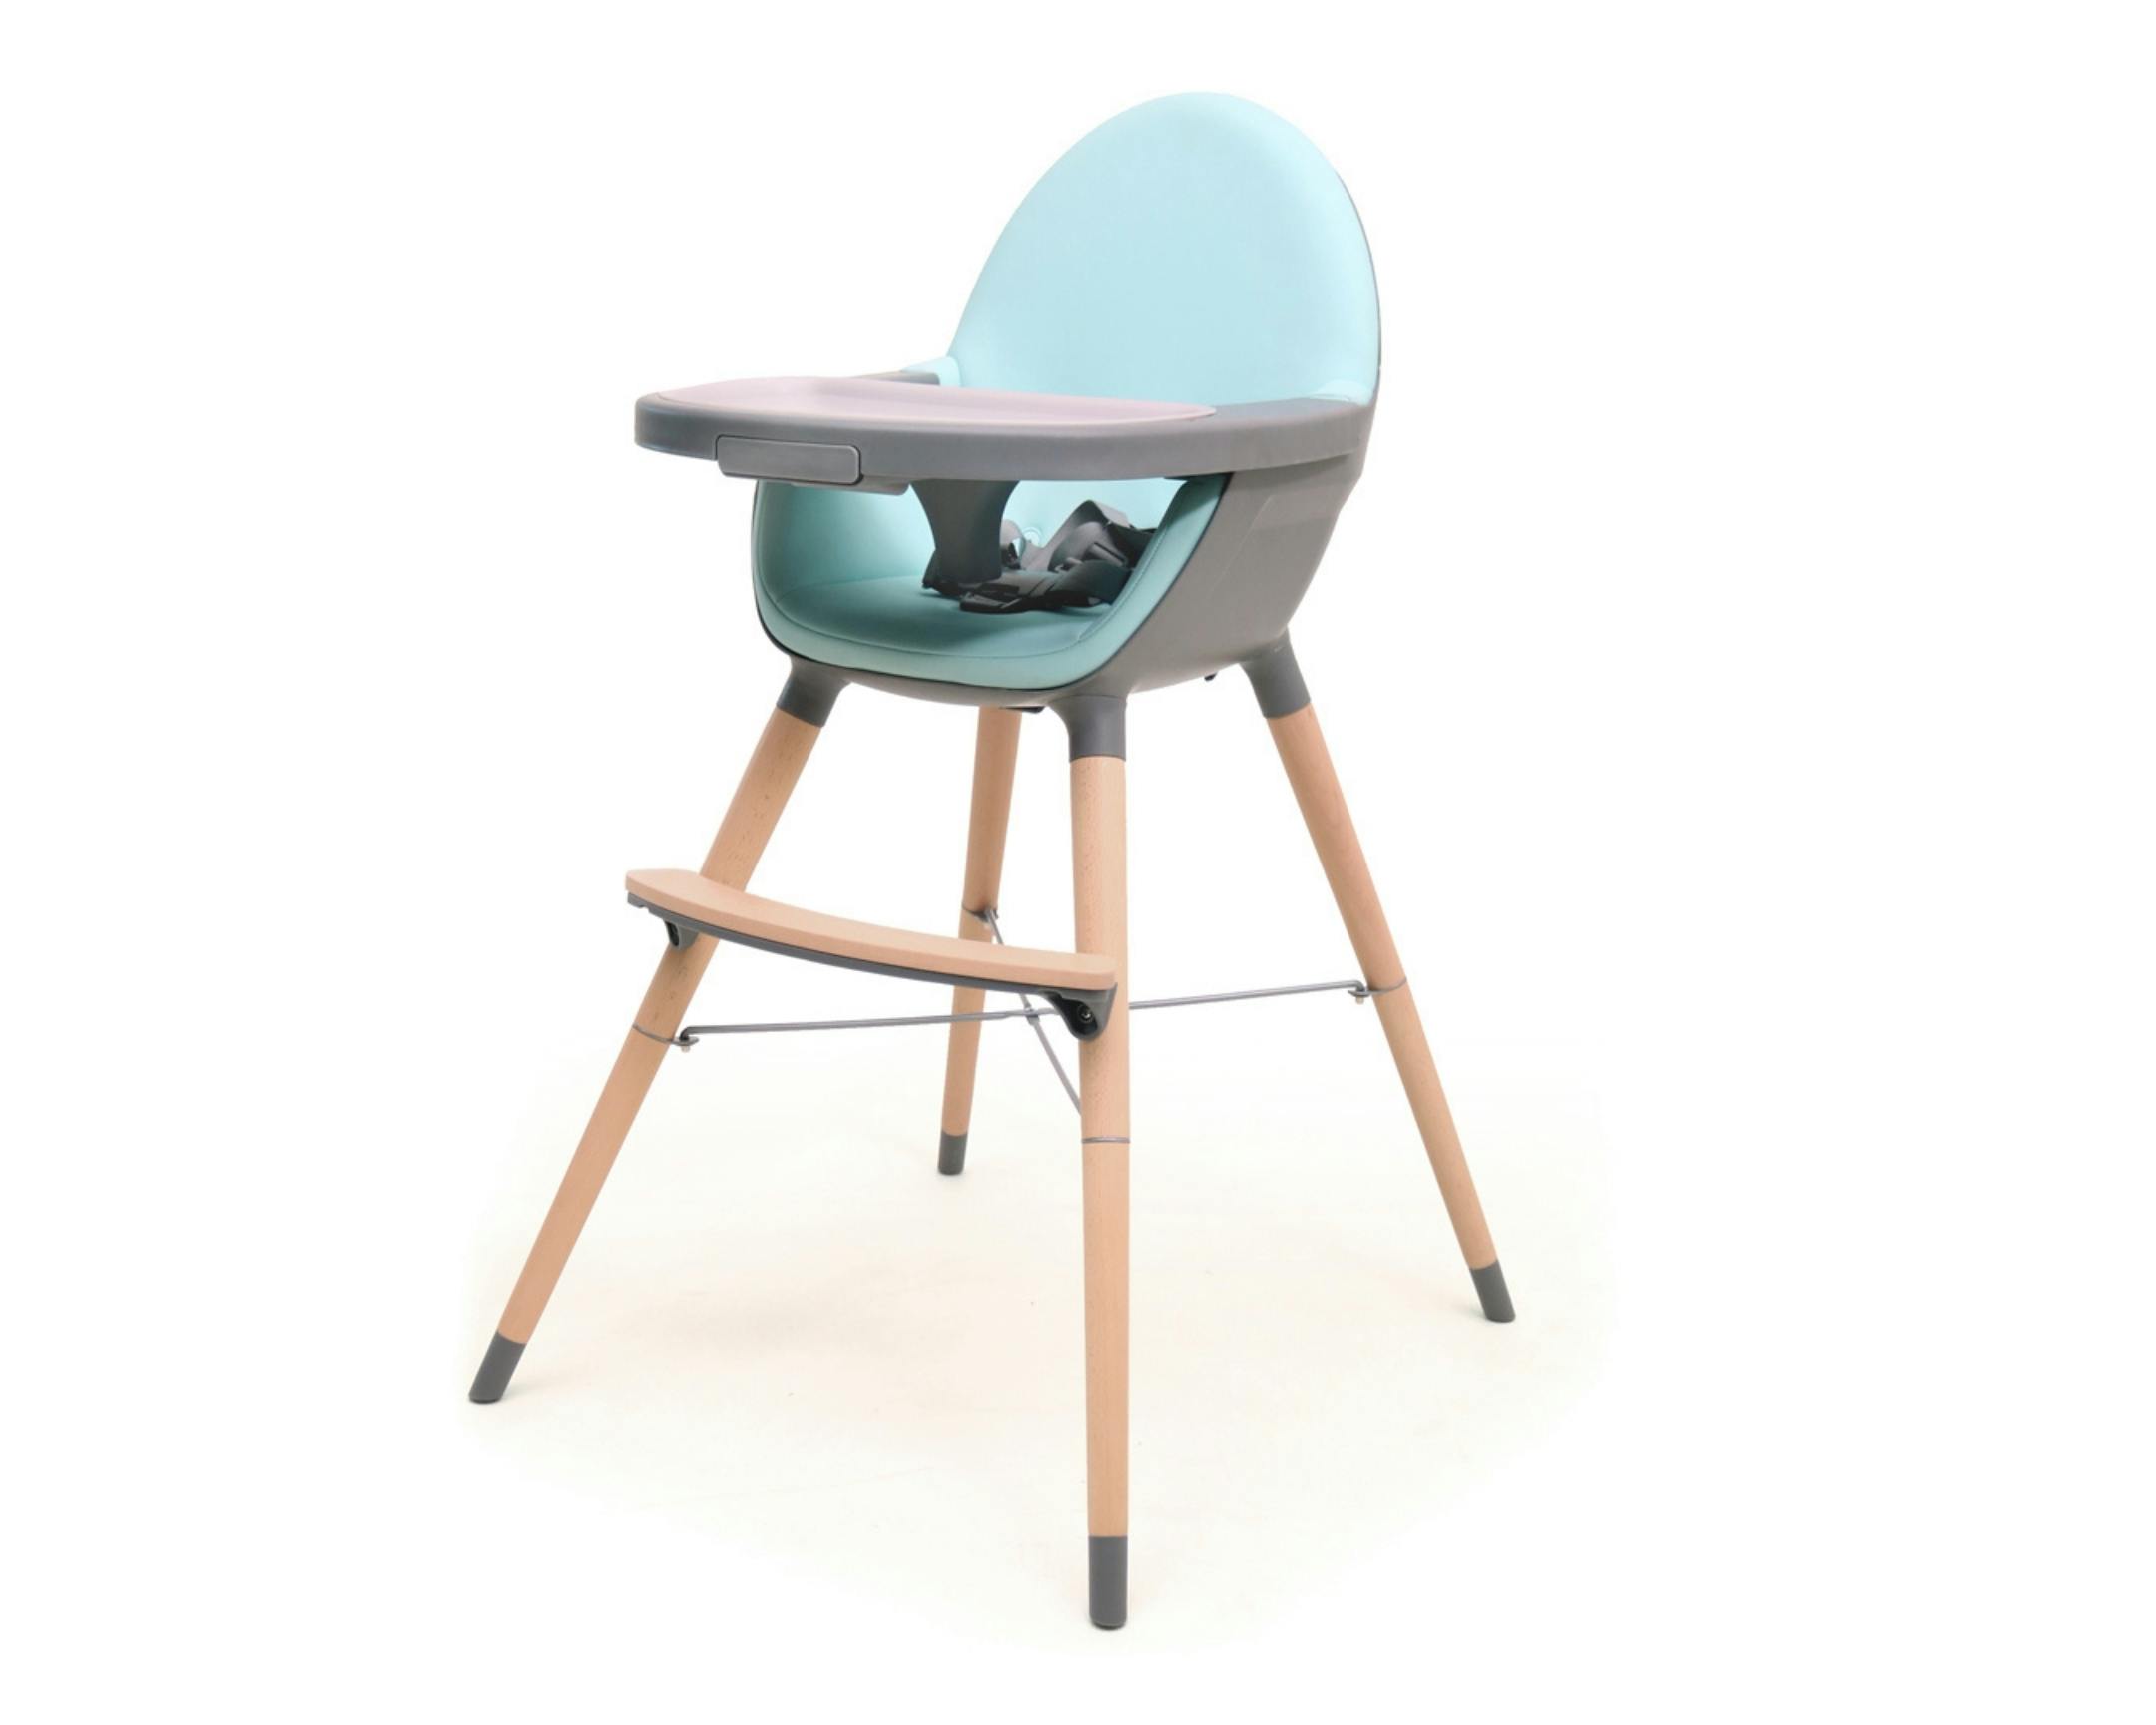 Webaby Kinderstoel 6-36 M - Blauw